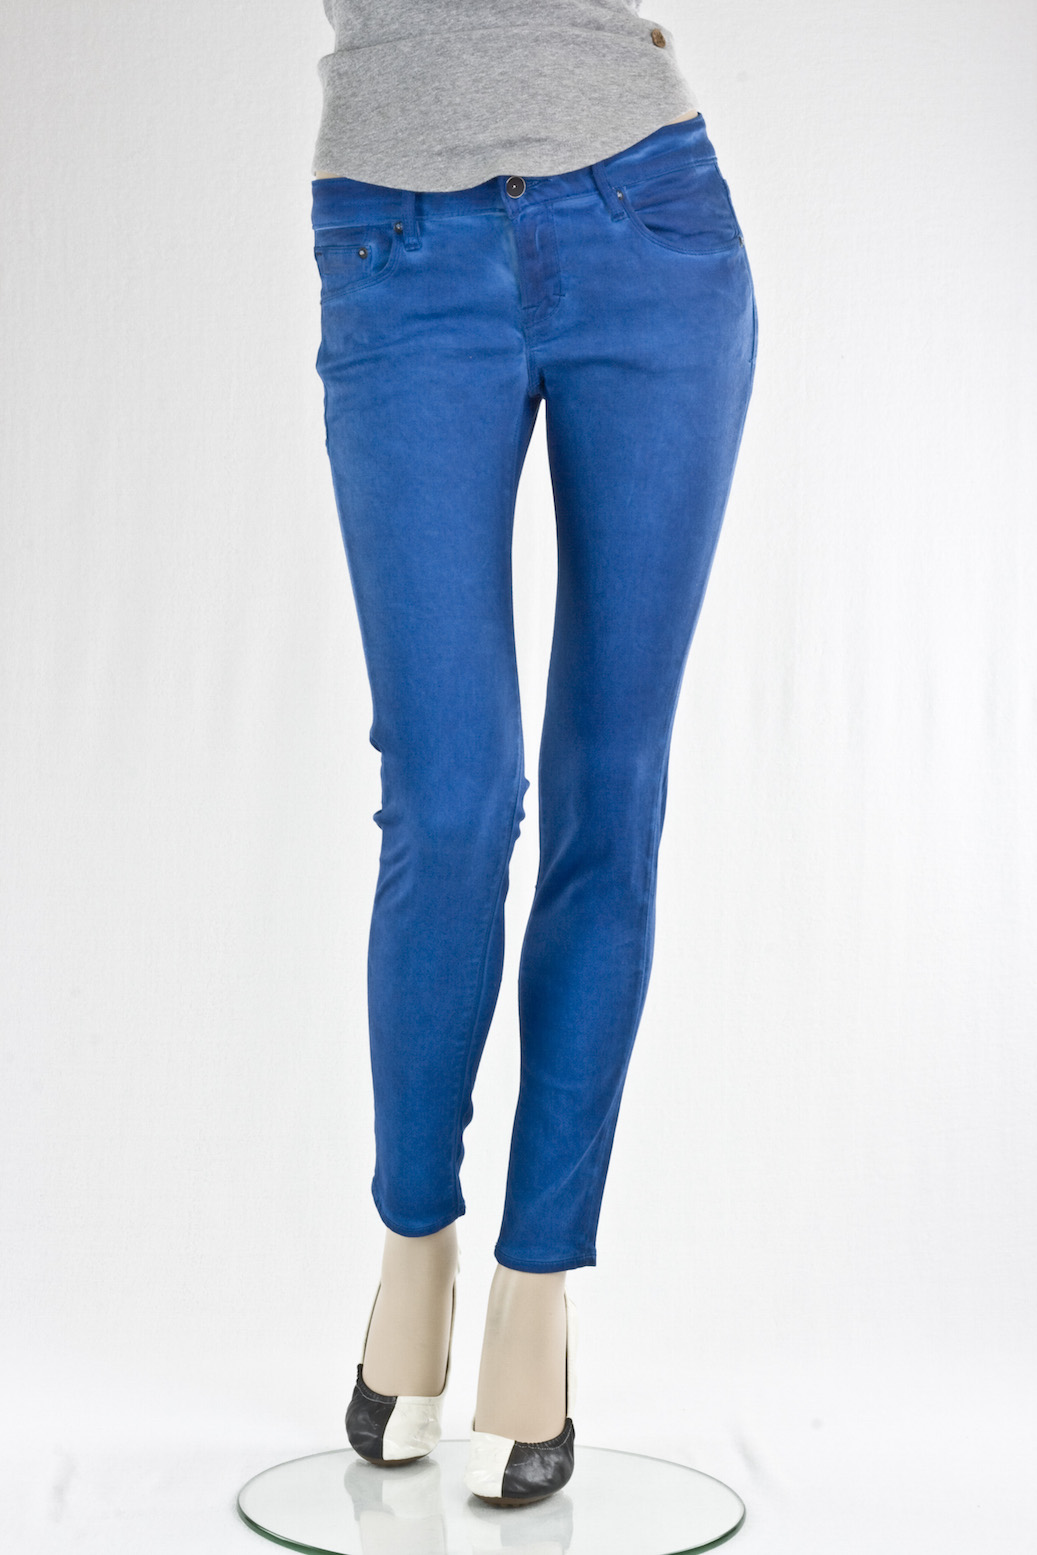 джинсы женские Cult of individuality "Скини" Royal teaser skinny jeans